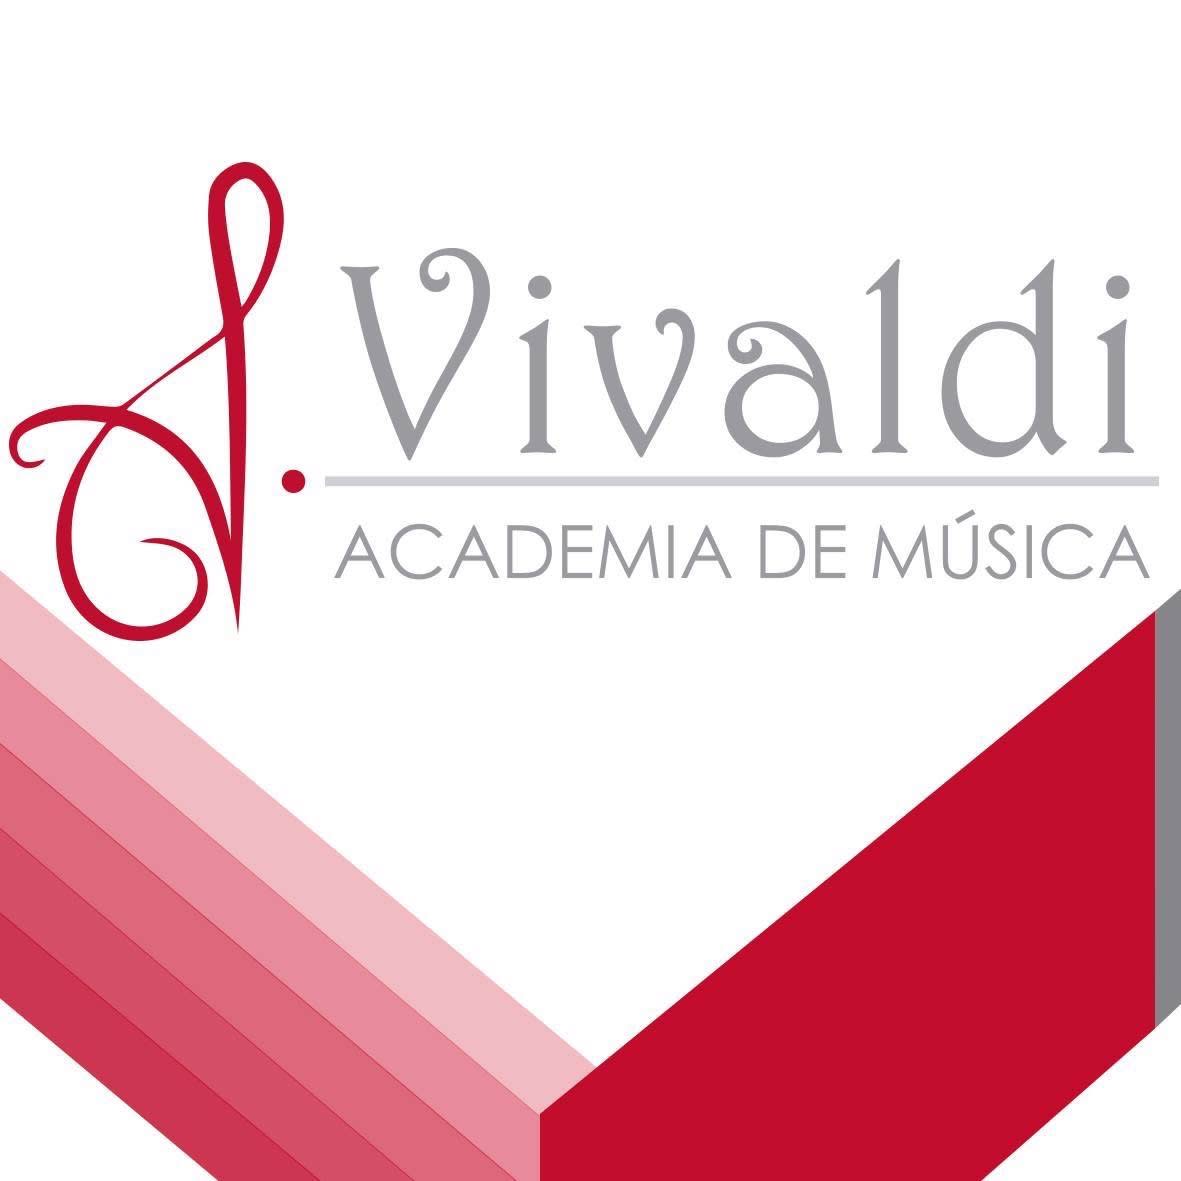 Vivaldi Academia de Musica